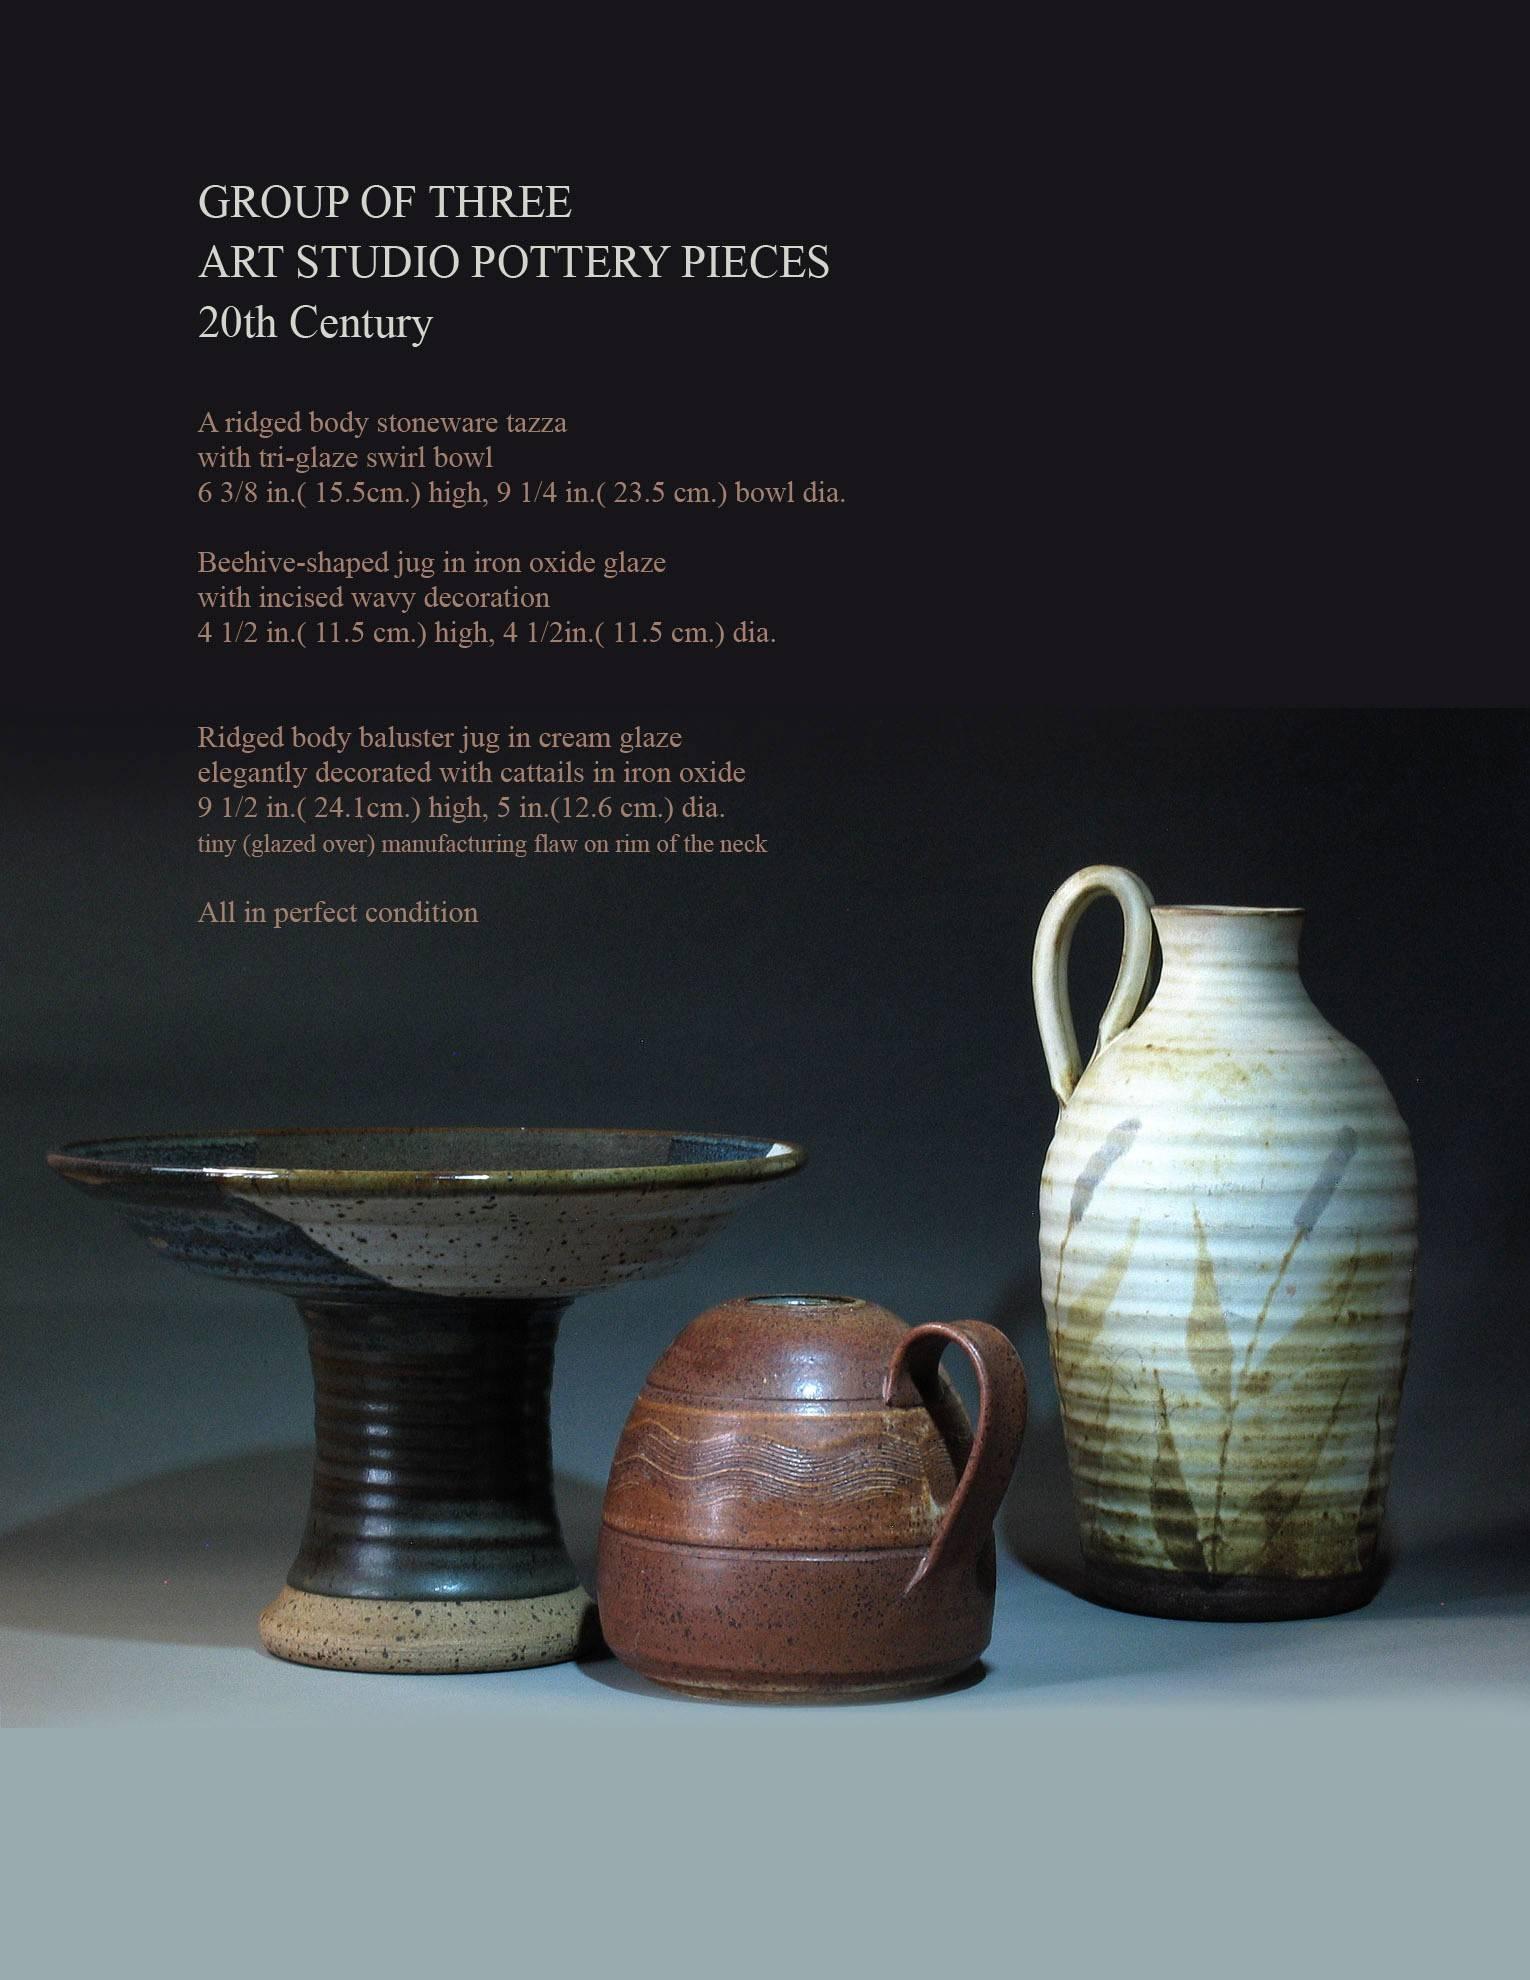 Group of three Art Studio pottery pieces 20th century,
1st- A ridged body stoneware tazza with tri-glaze swirl bowl, measures 6 3/8